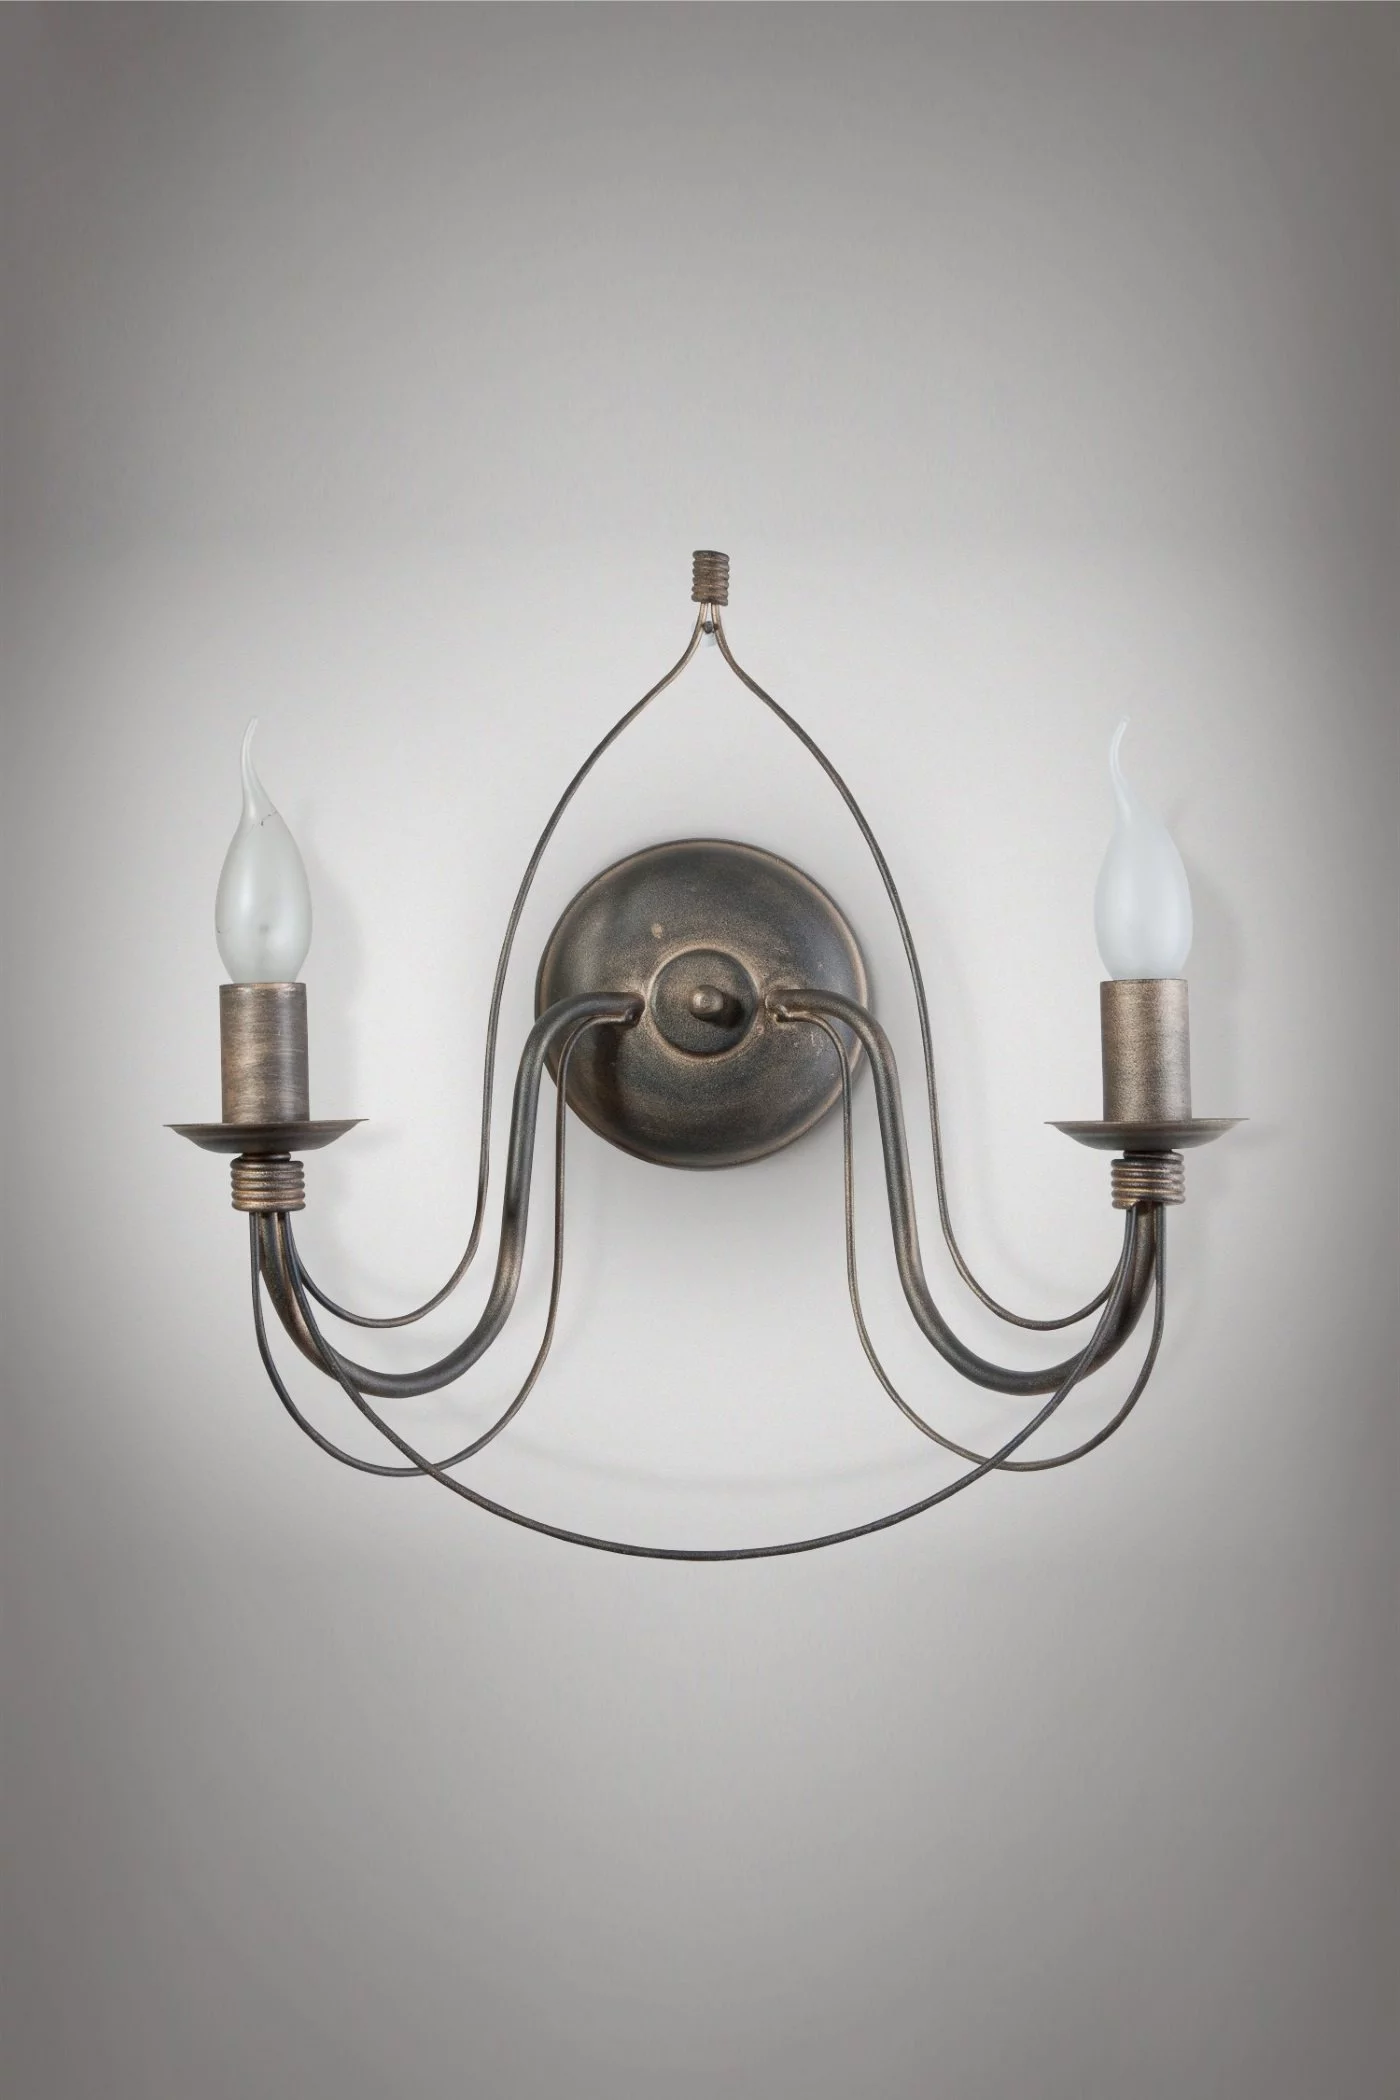   
                        
                        Бра NB LIGHT (Украина) 17994    
                         в стиле Классика.  
                        Тип источника света: светодиодная лампа, сменная.                                                                                                  фото 1